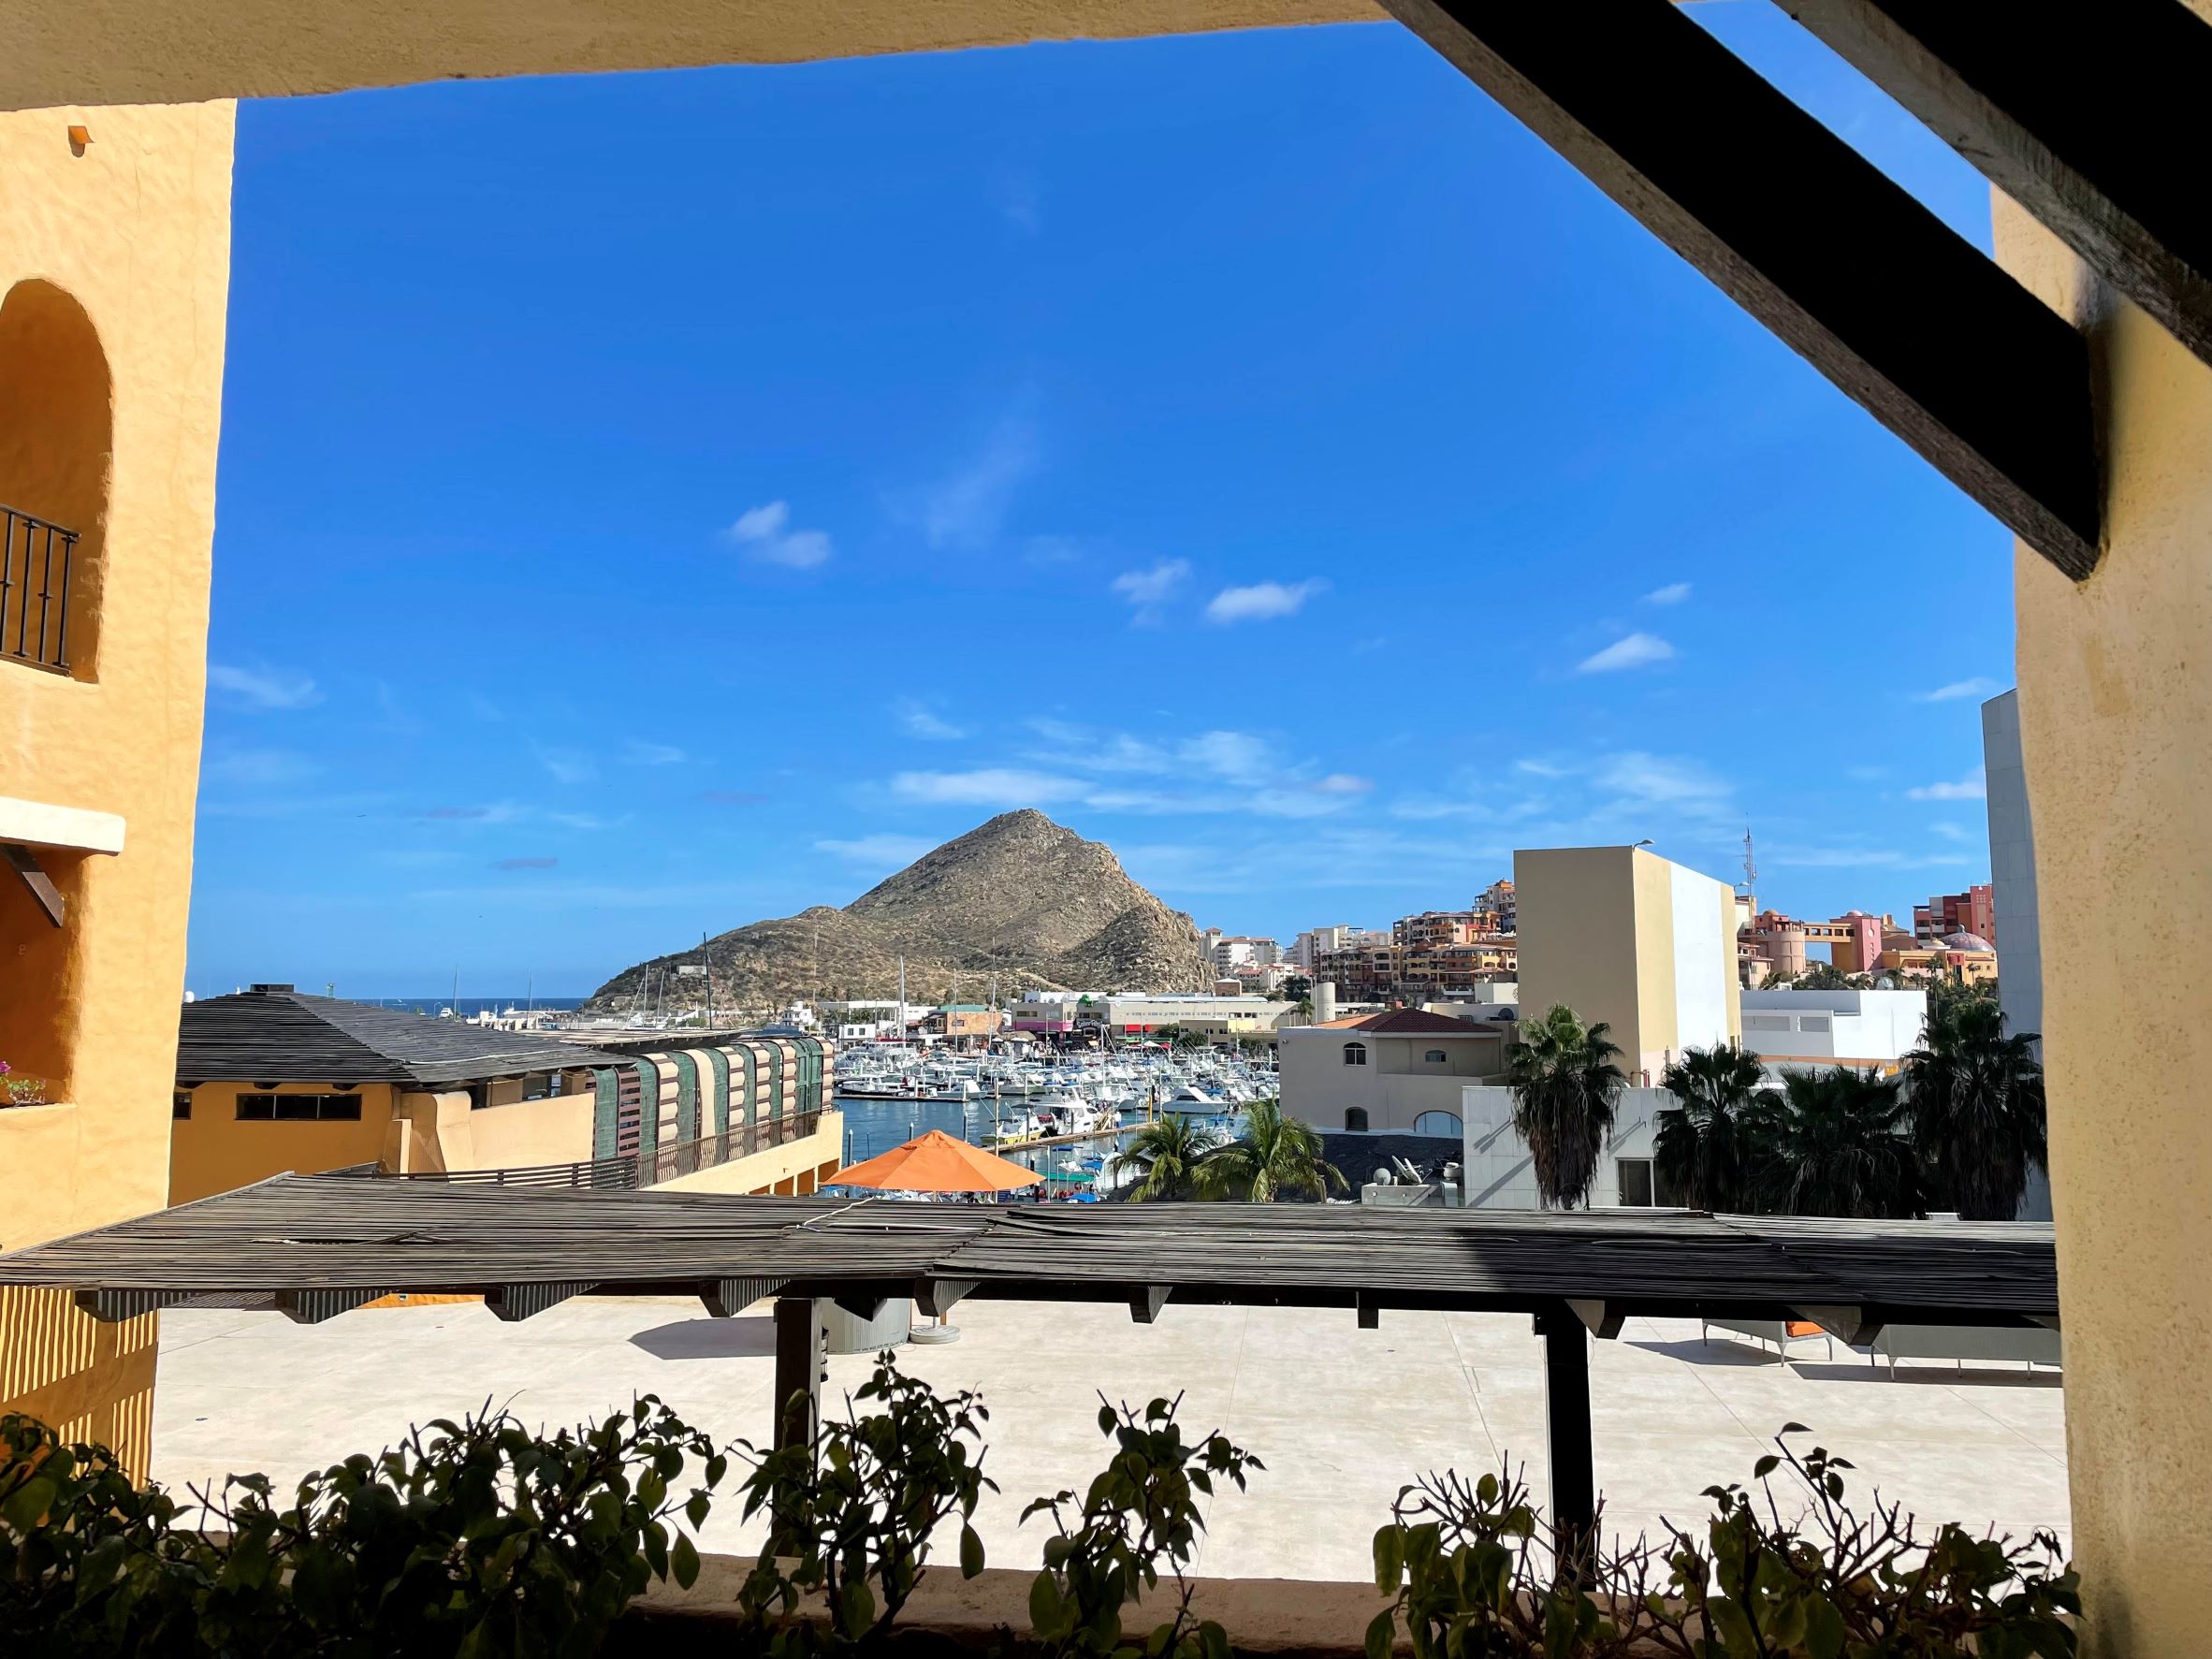 Cabo San Lucas Marina viewed from a balcony